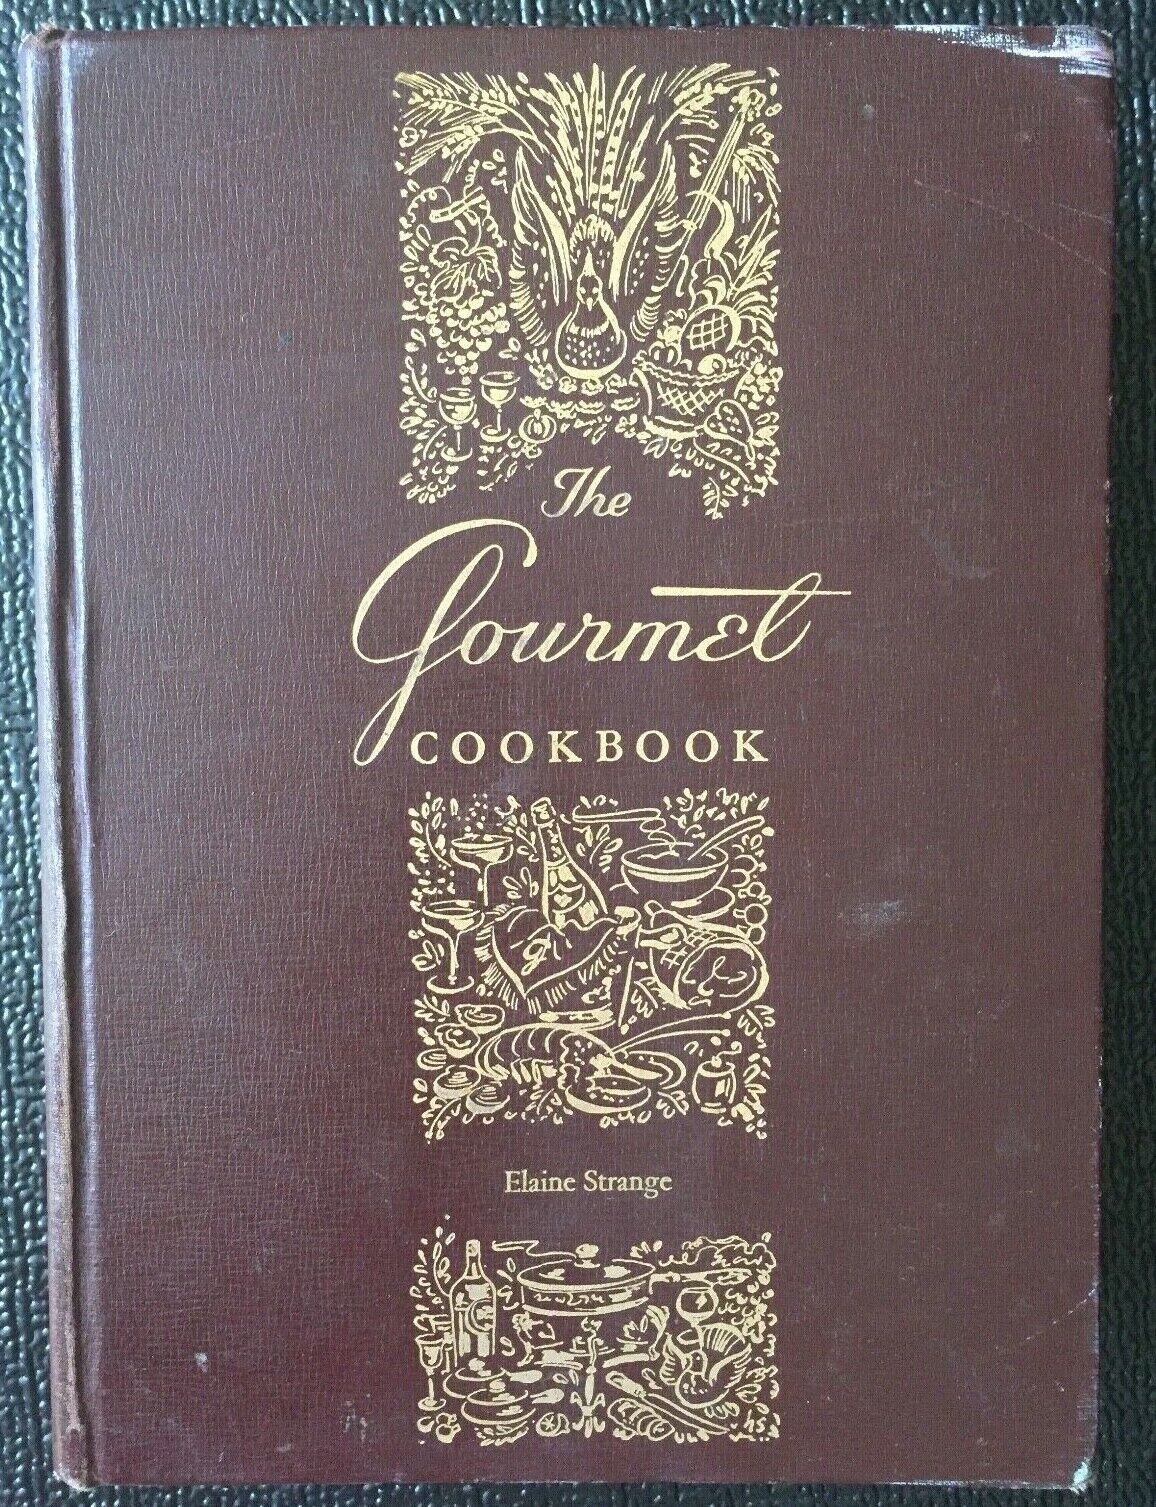 THE GOURMET COOKBOOK SIGNED BY ELAINE STRANGE 1952 HARDCOVER 781pg RECIPES Rare